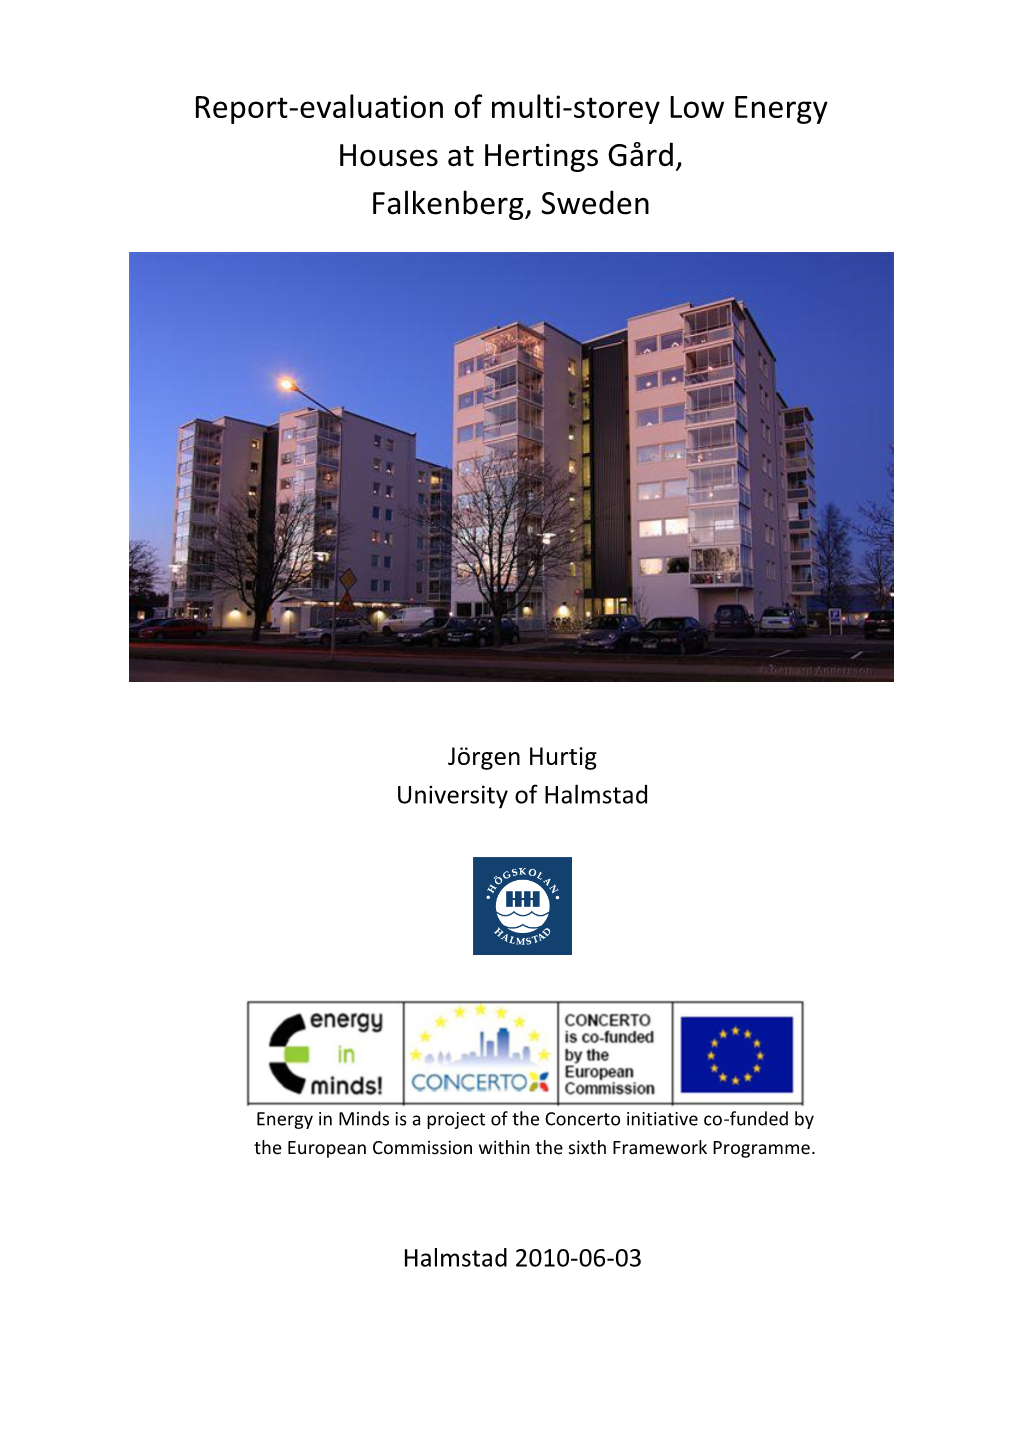 Report-Evaluation of Multi-Storey Low Energy Houses at Hertings Gård, Falkenberg, Sweden